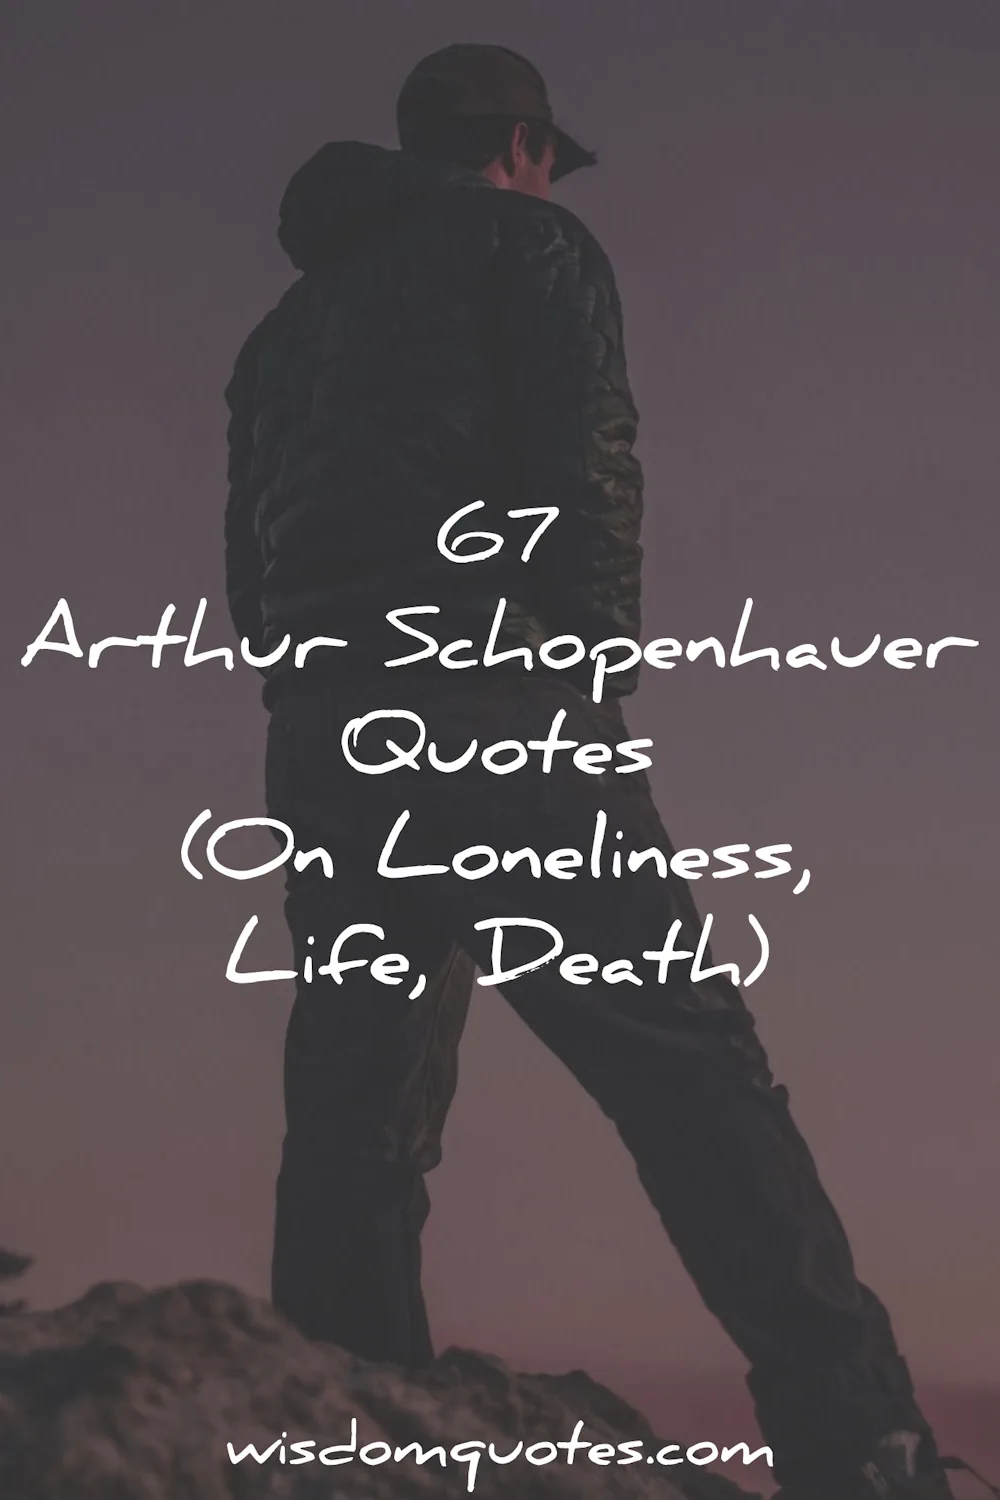 arthur schopenhauer loneliness life death wisdom quotes